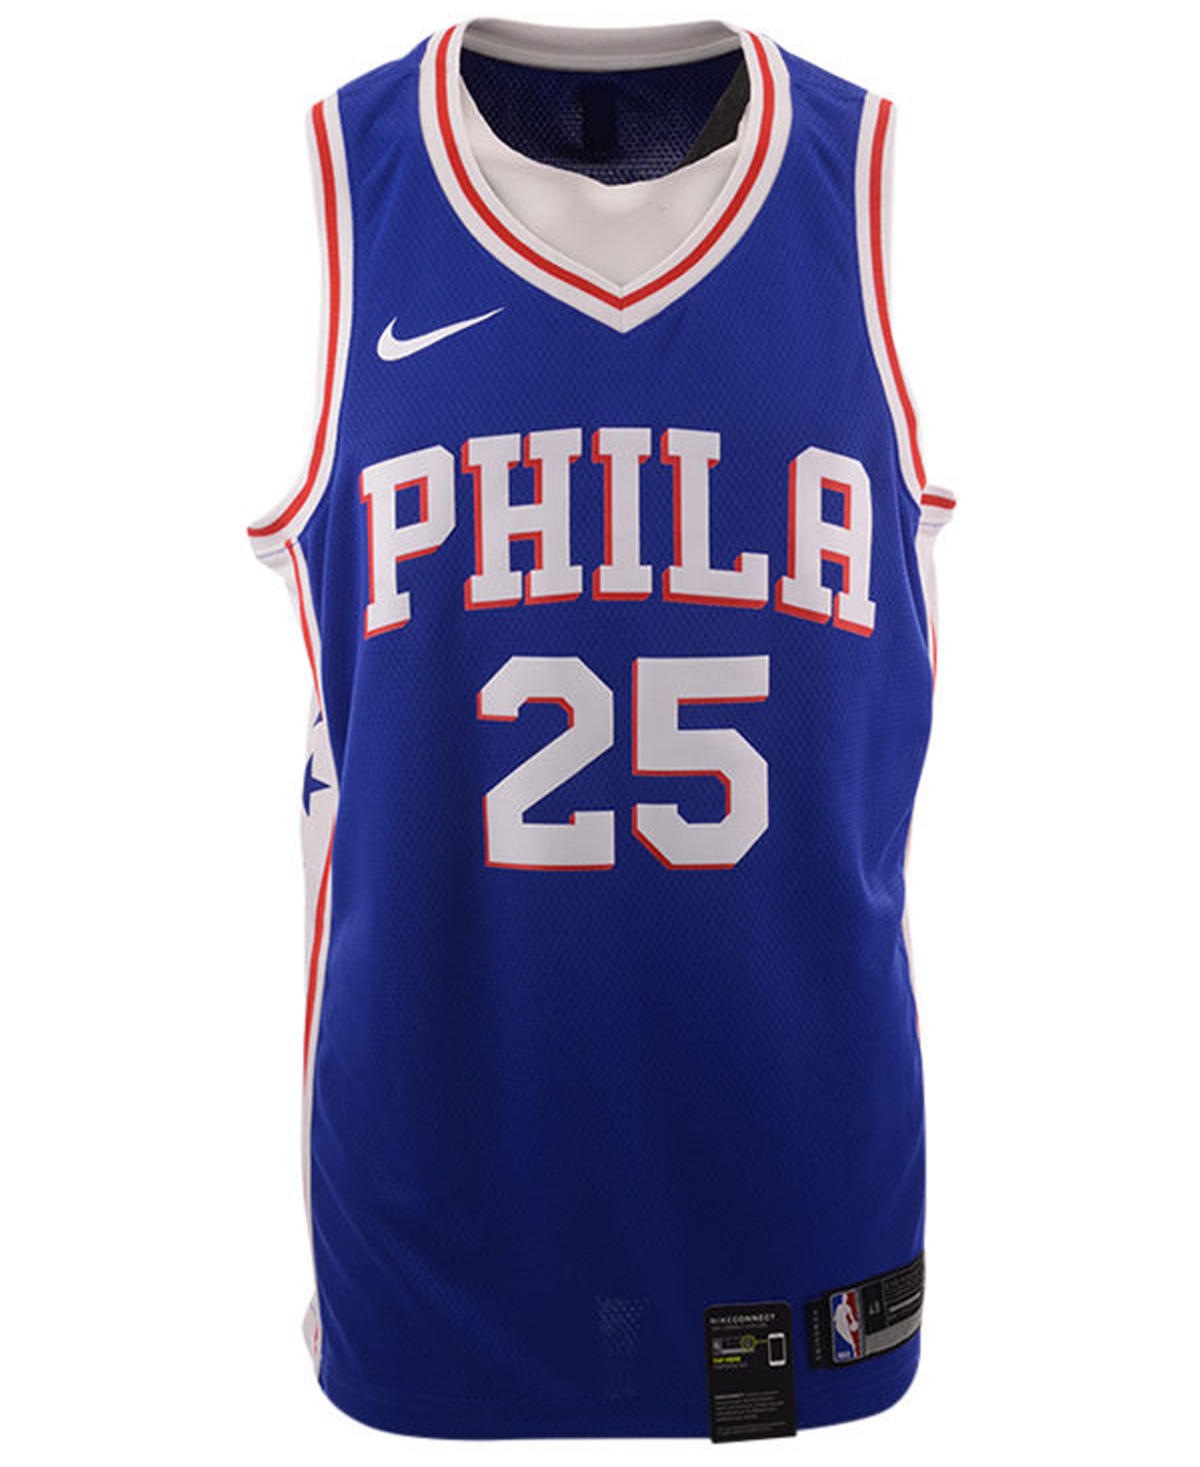 UPC 193149004517 product image for Nike Men's Ben Simmons Philadelphia 76ers Icon Swingman Jersey | upcitemdb.com